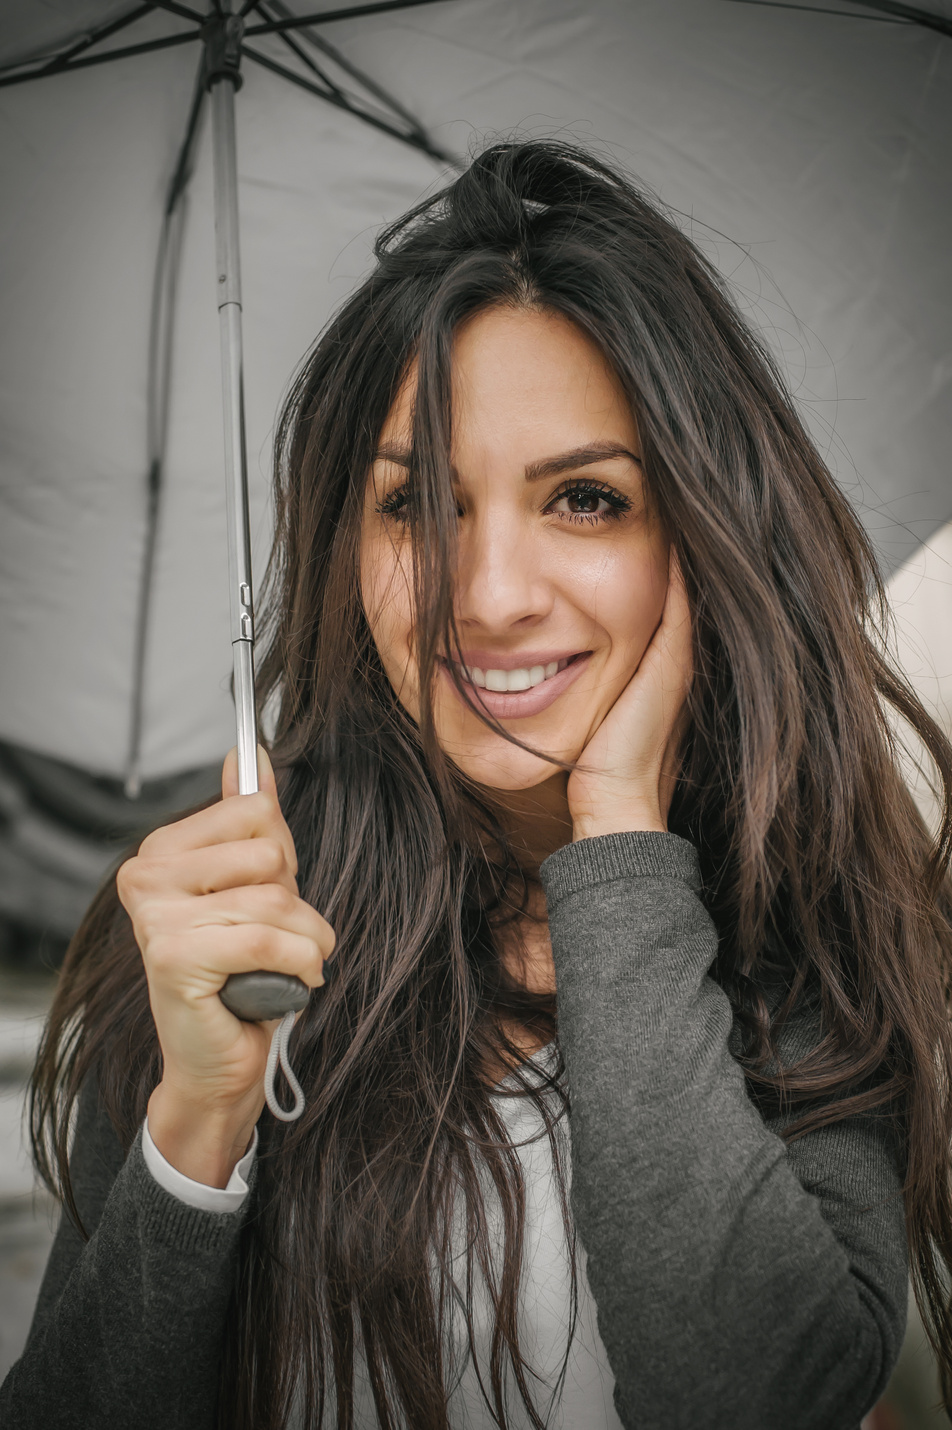 Happy smiling woman under umbrella in rain